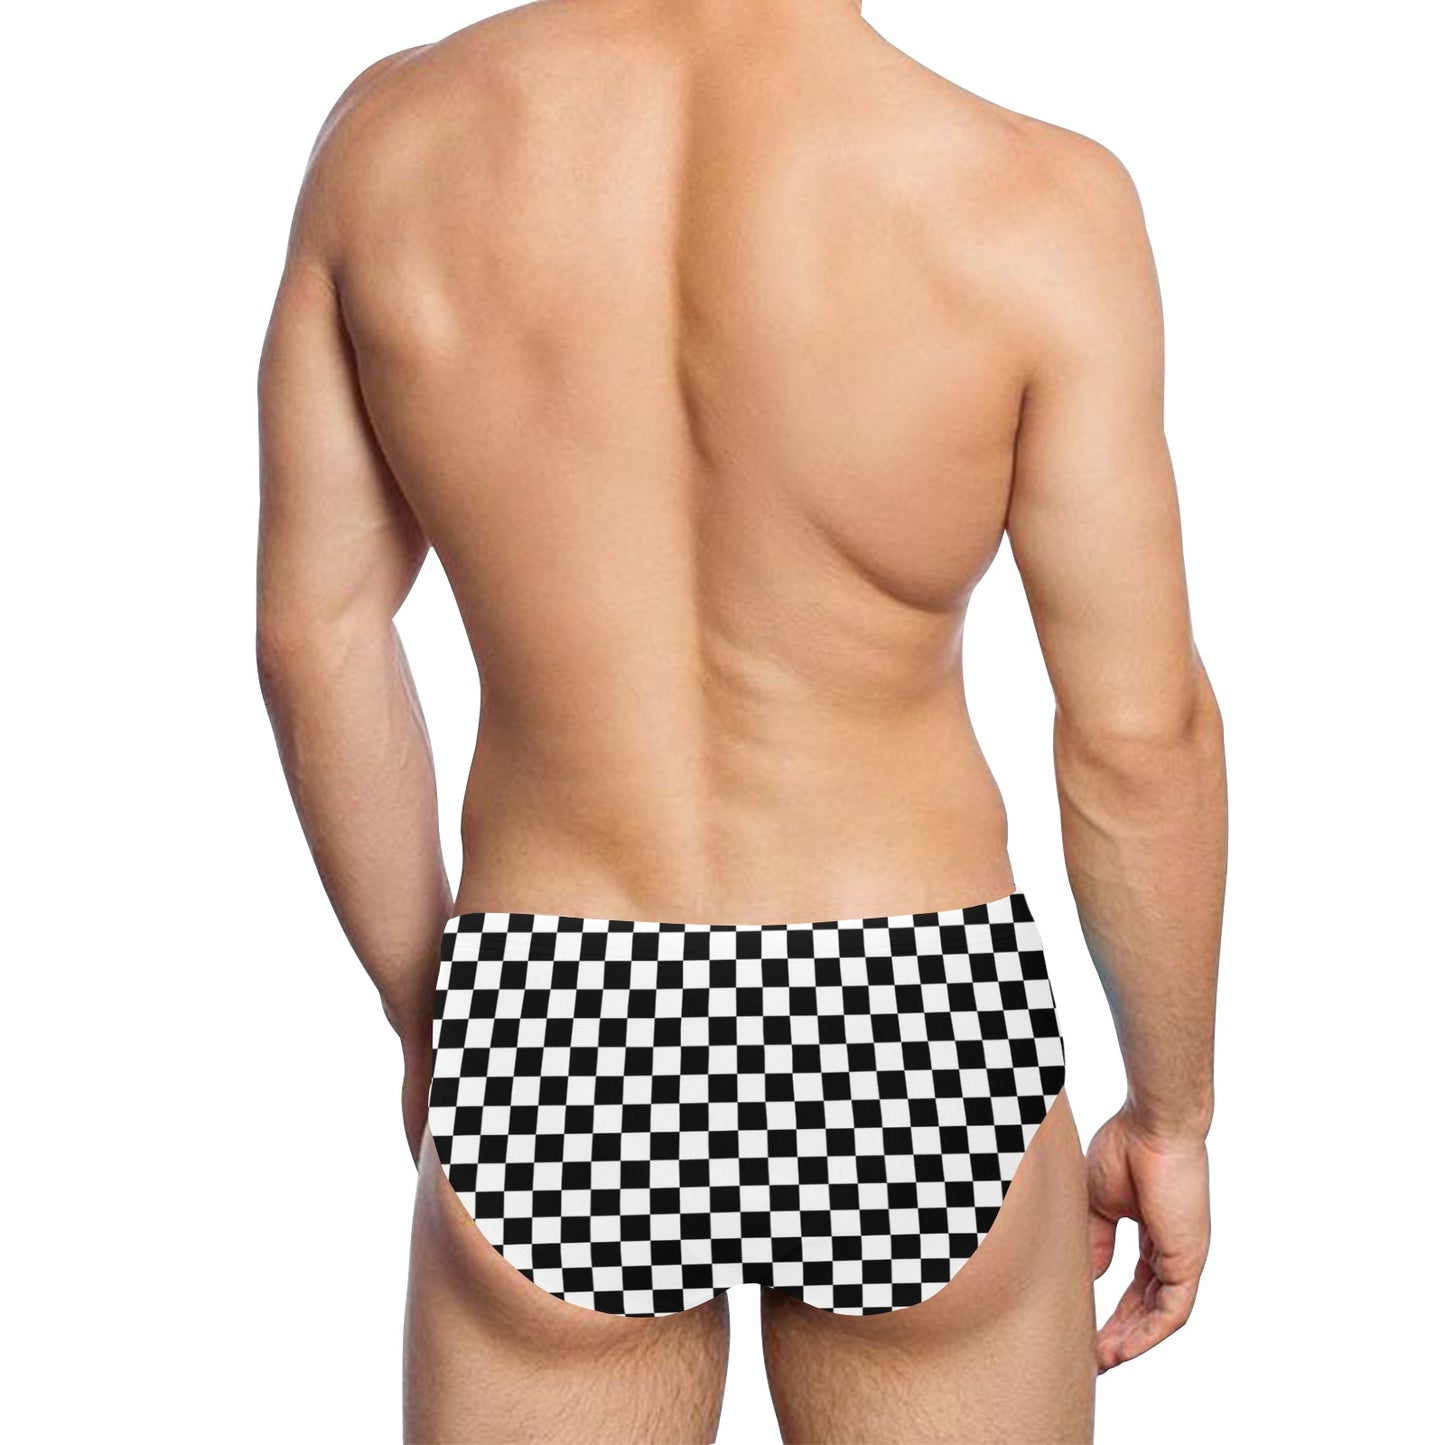 Checkered Men Swim Briefs, Black White Check Sexy 80s Swimwear Trunks Swimming Suit Swimsuit Low Rise Underwear Vintage Designer Bikini Starcove Fashion